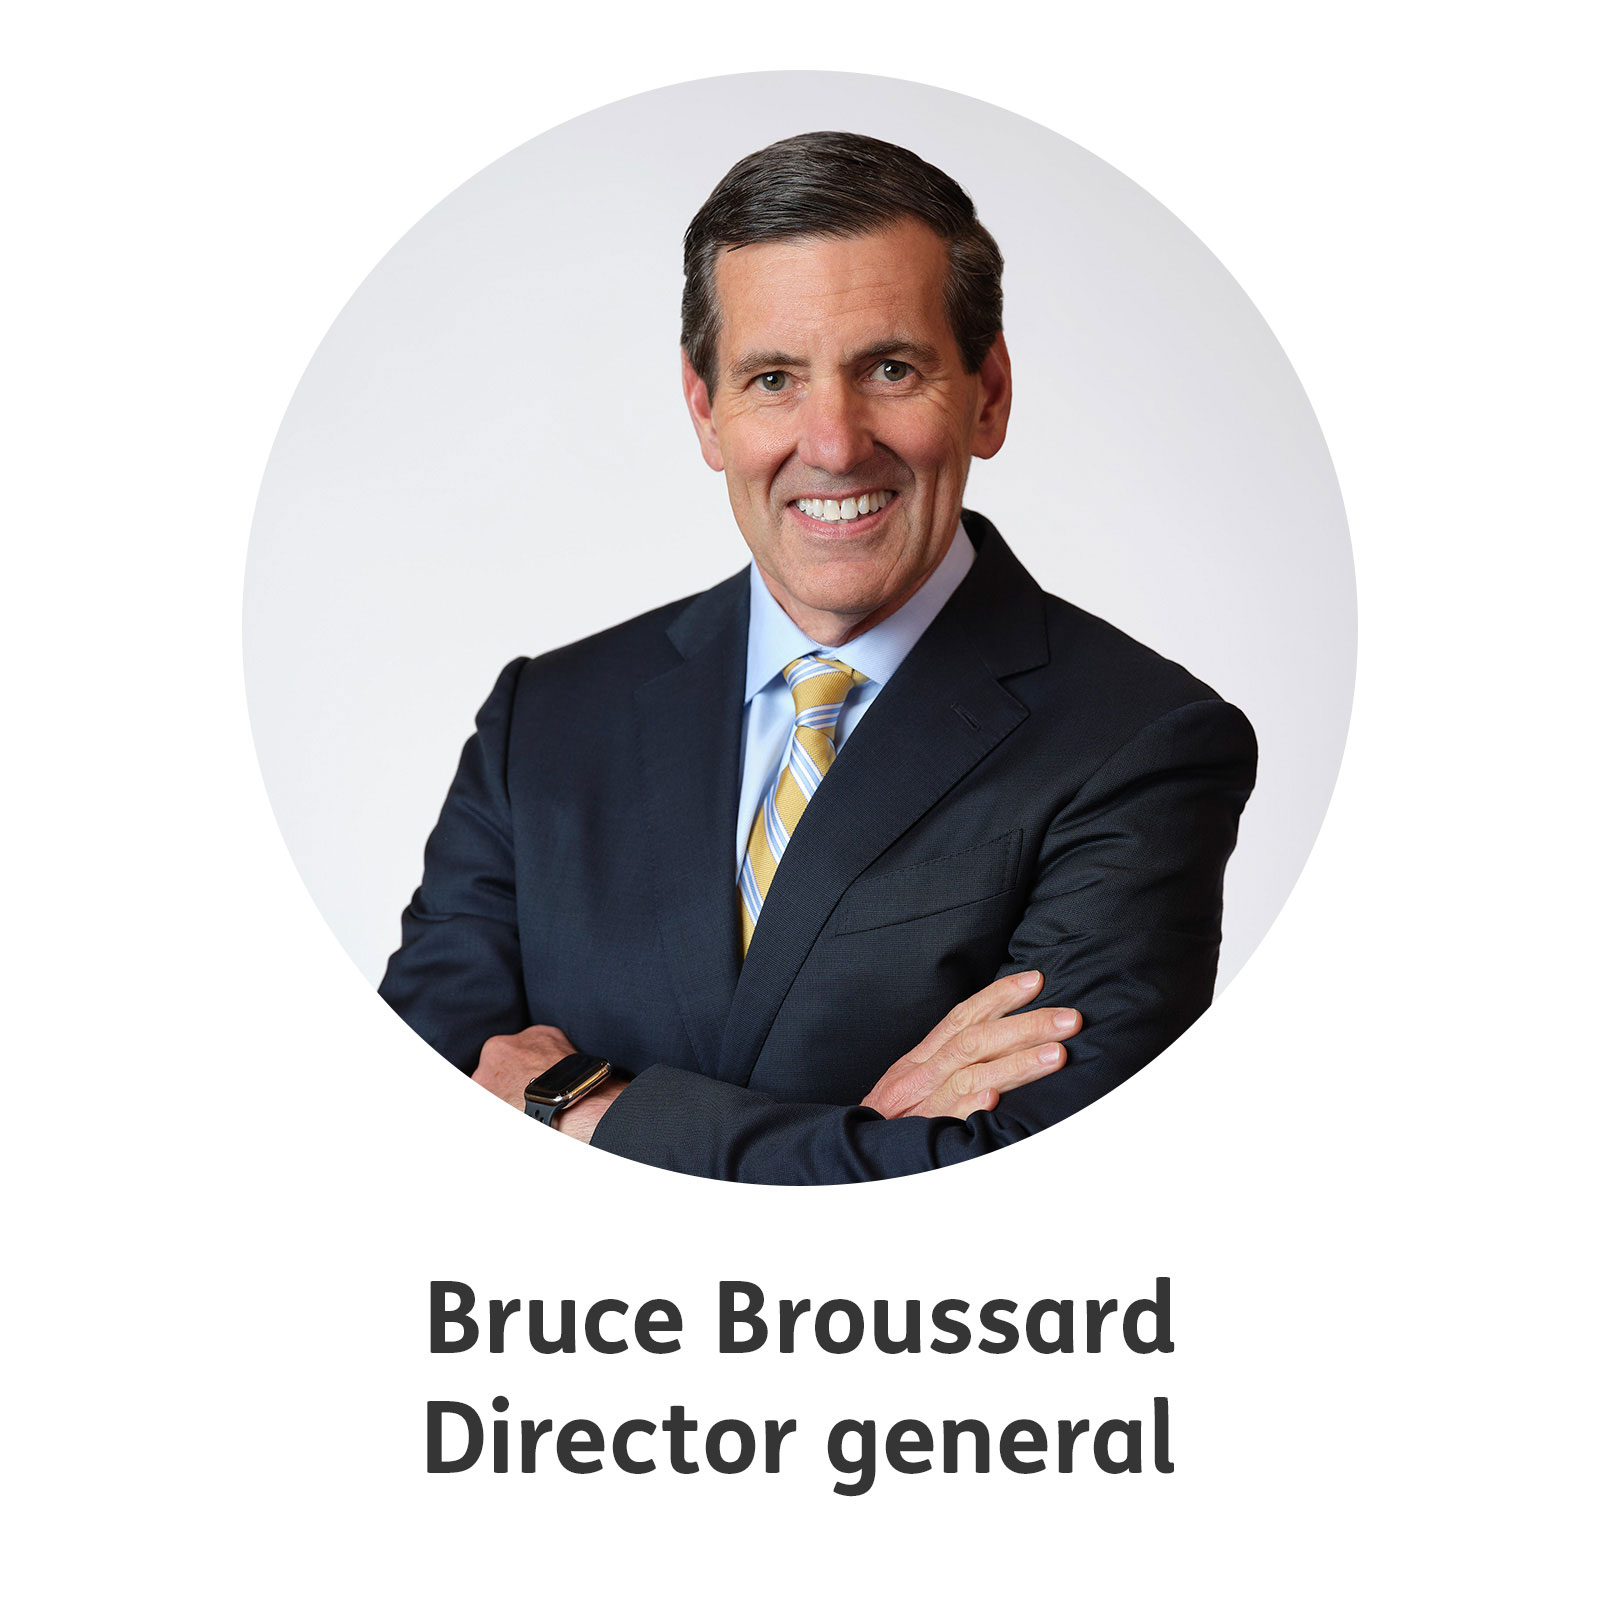 Bruce Broussard, director general